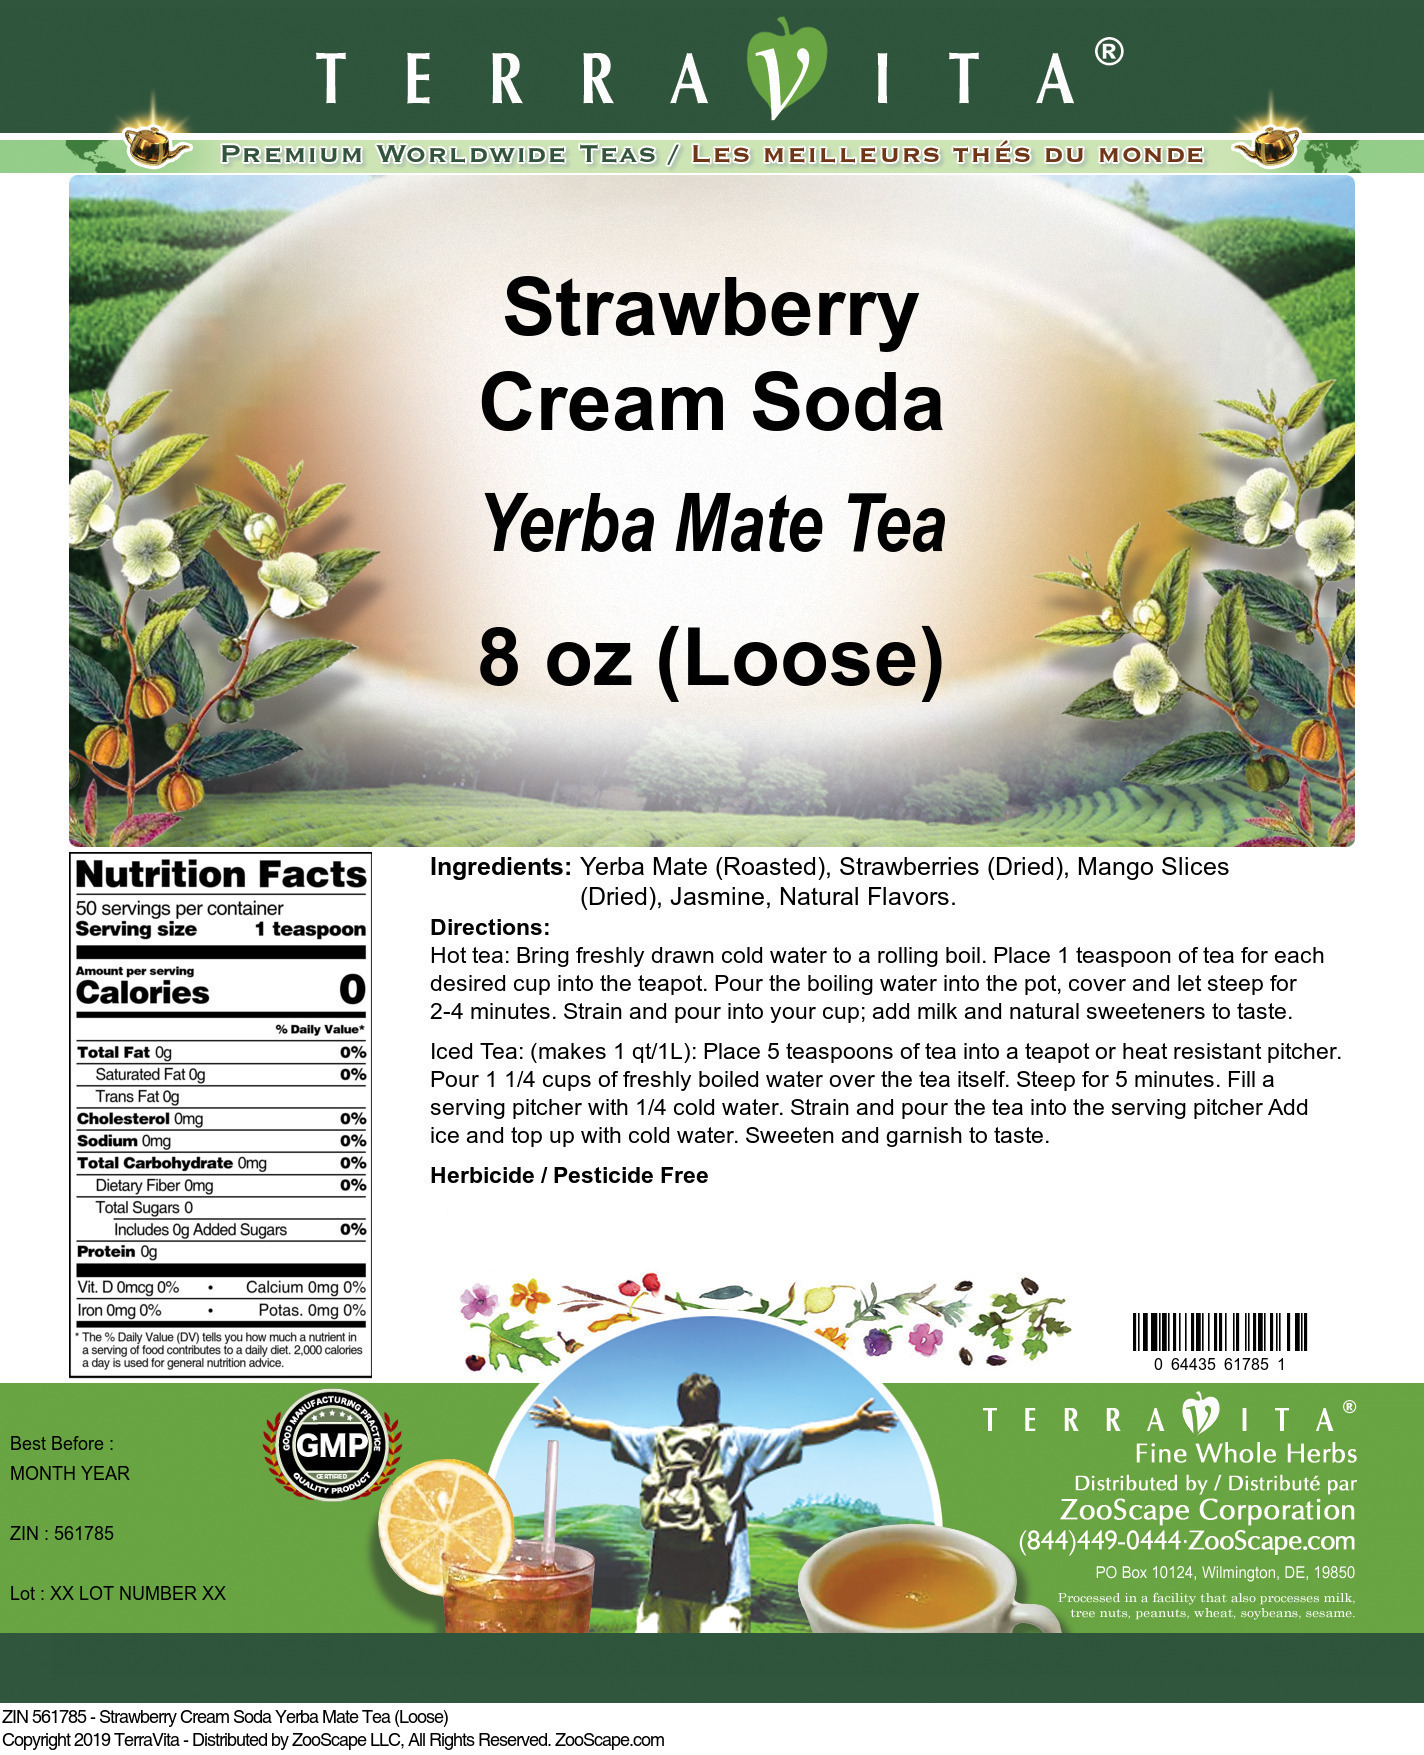 Strawberry Cream Soda Yerba Mate Tea (Loose) - Label